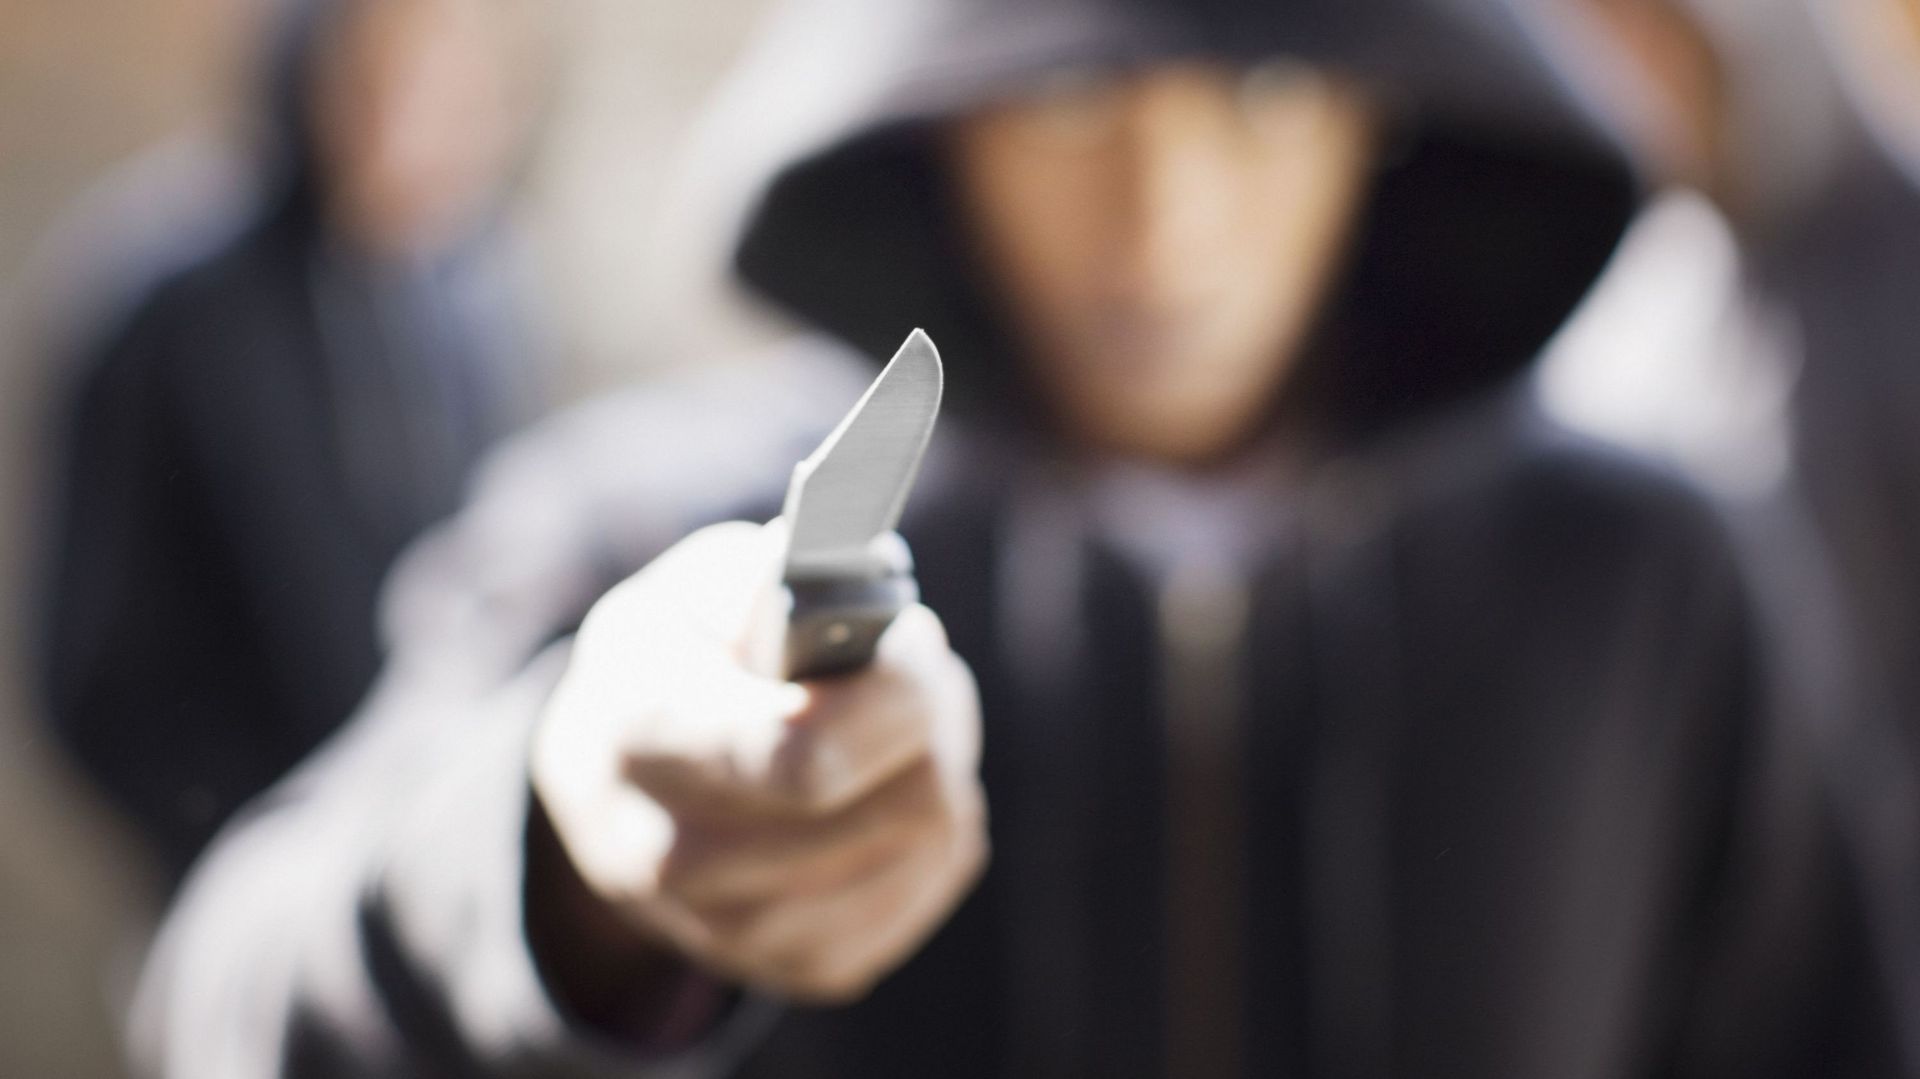 Man threatening with pocket knife